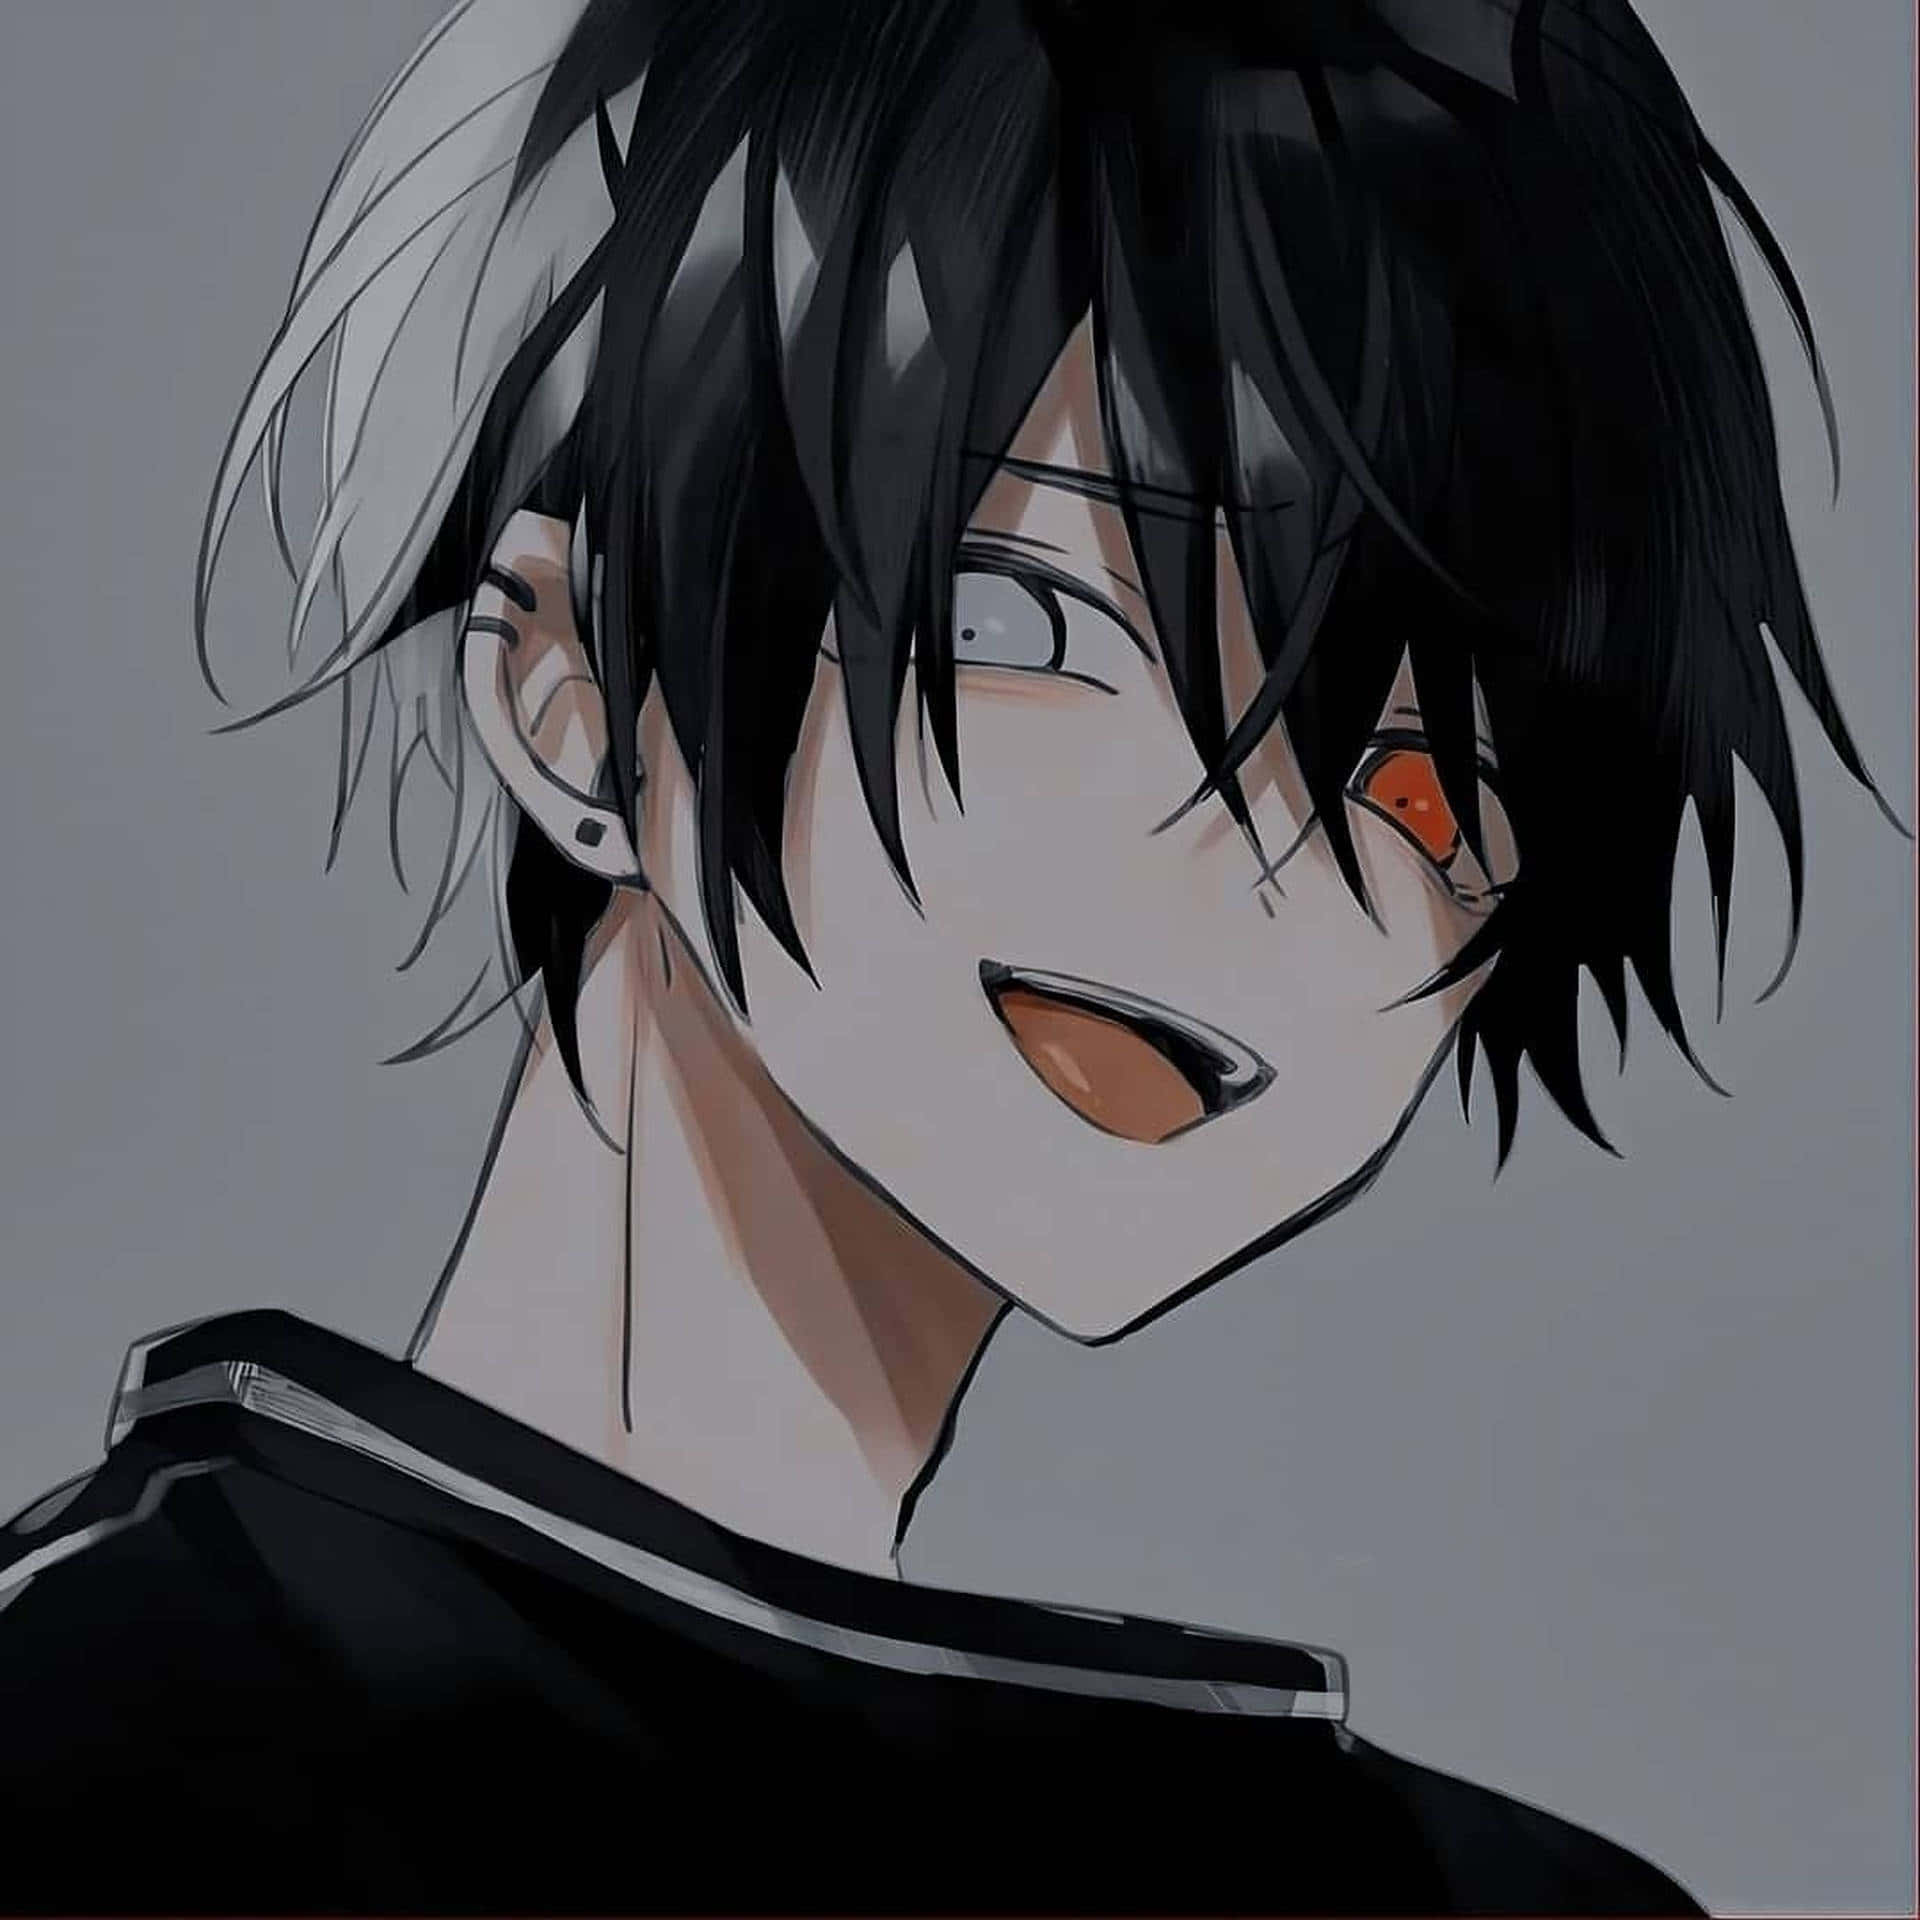 Anime Boy In Black And White Anime Pfp Wallpaper